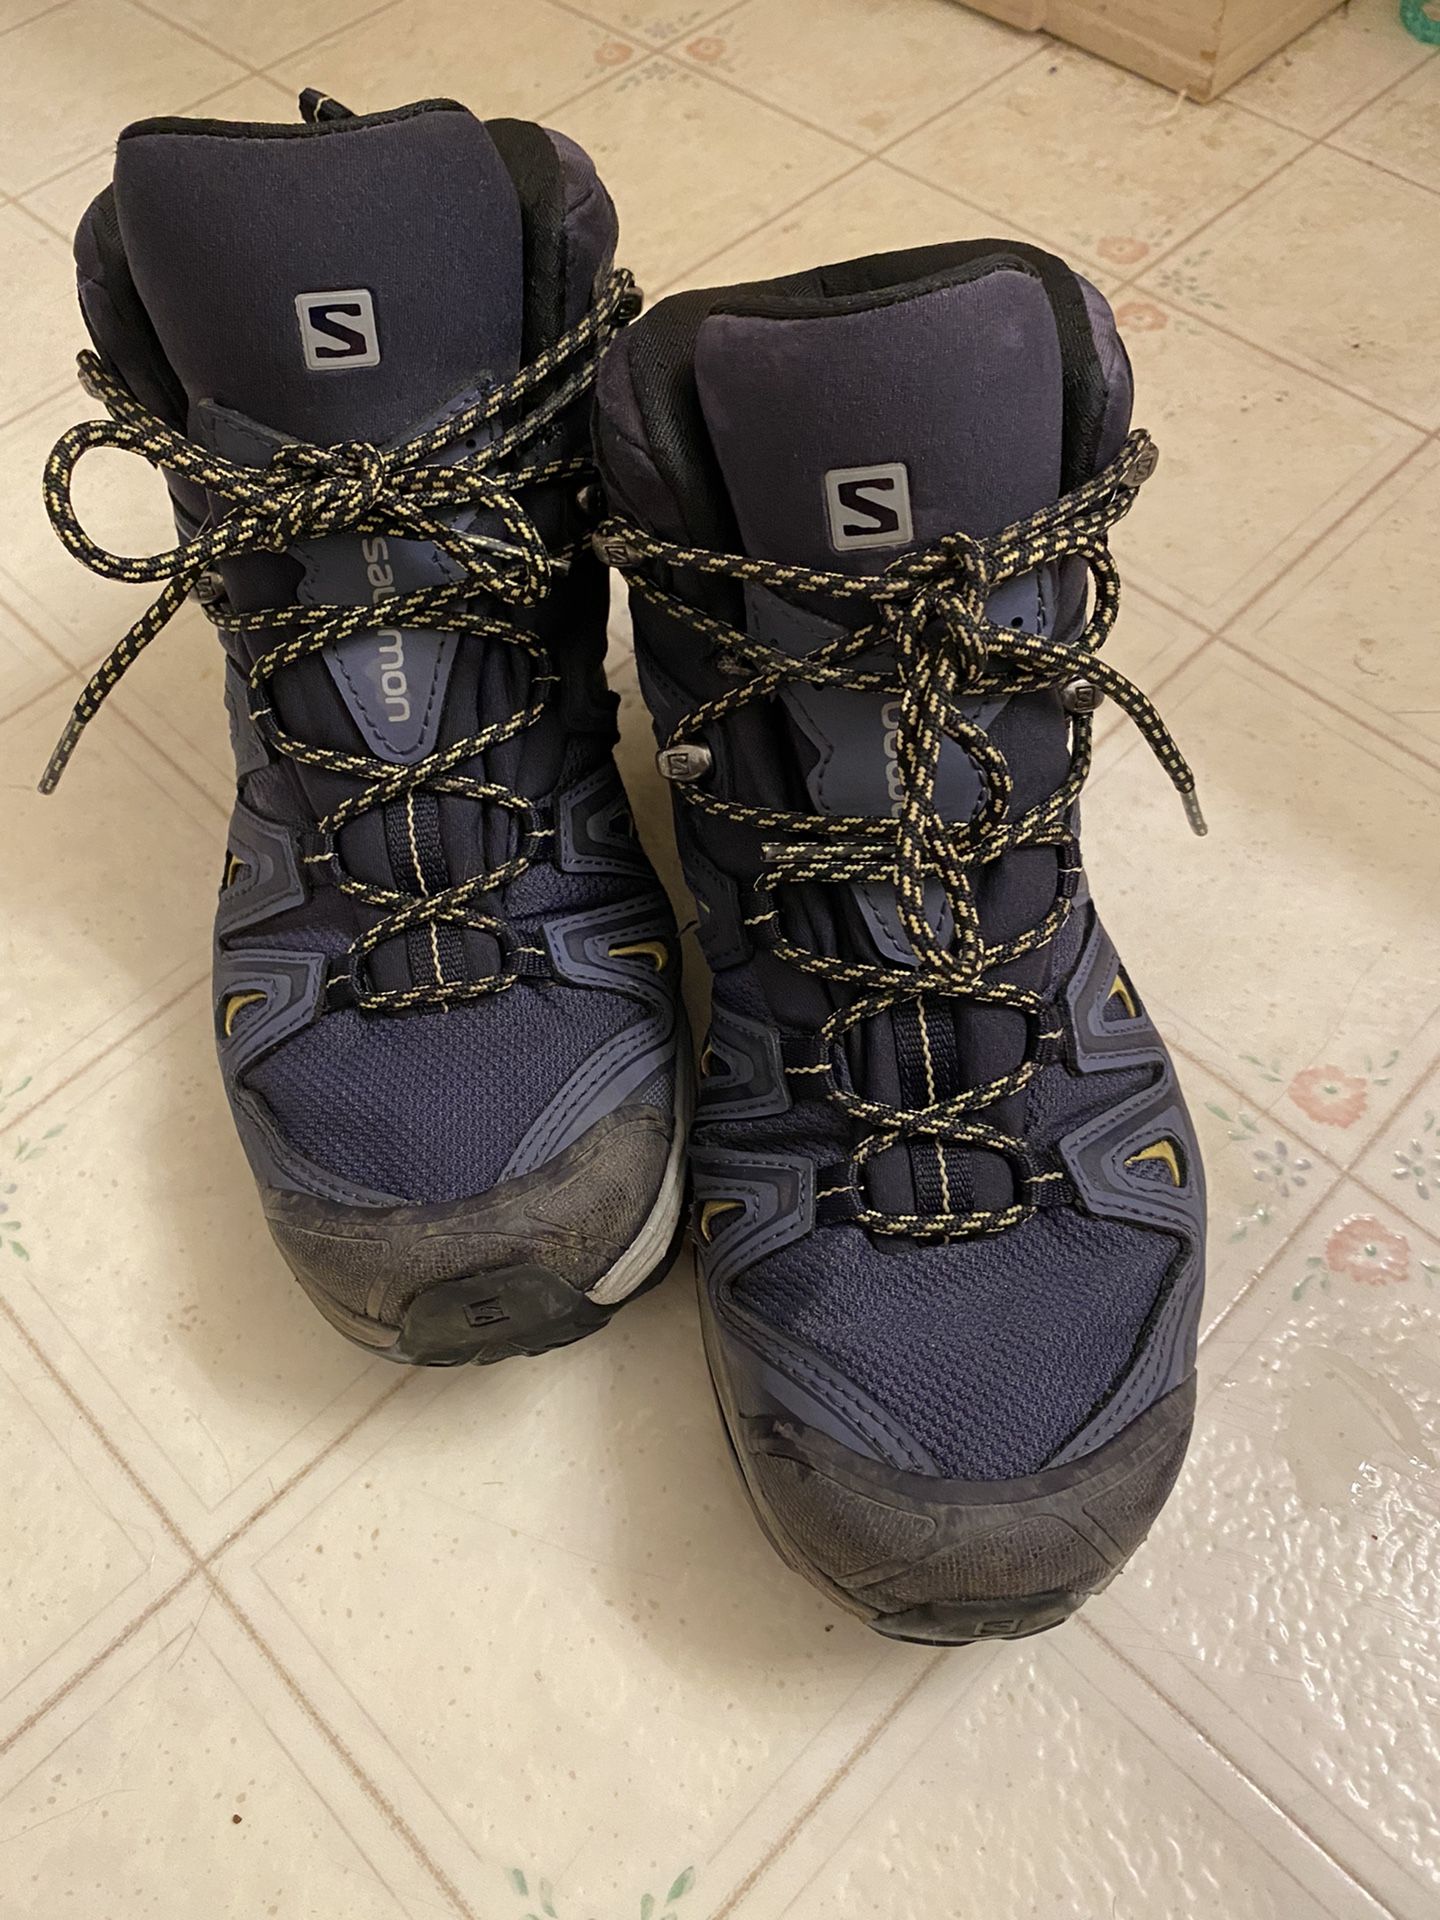 Salomon Hiking Boots Women’s Size 8.5 US